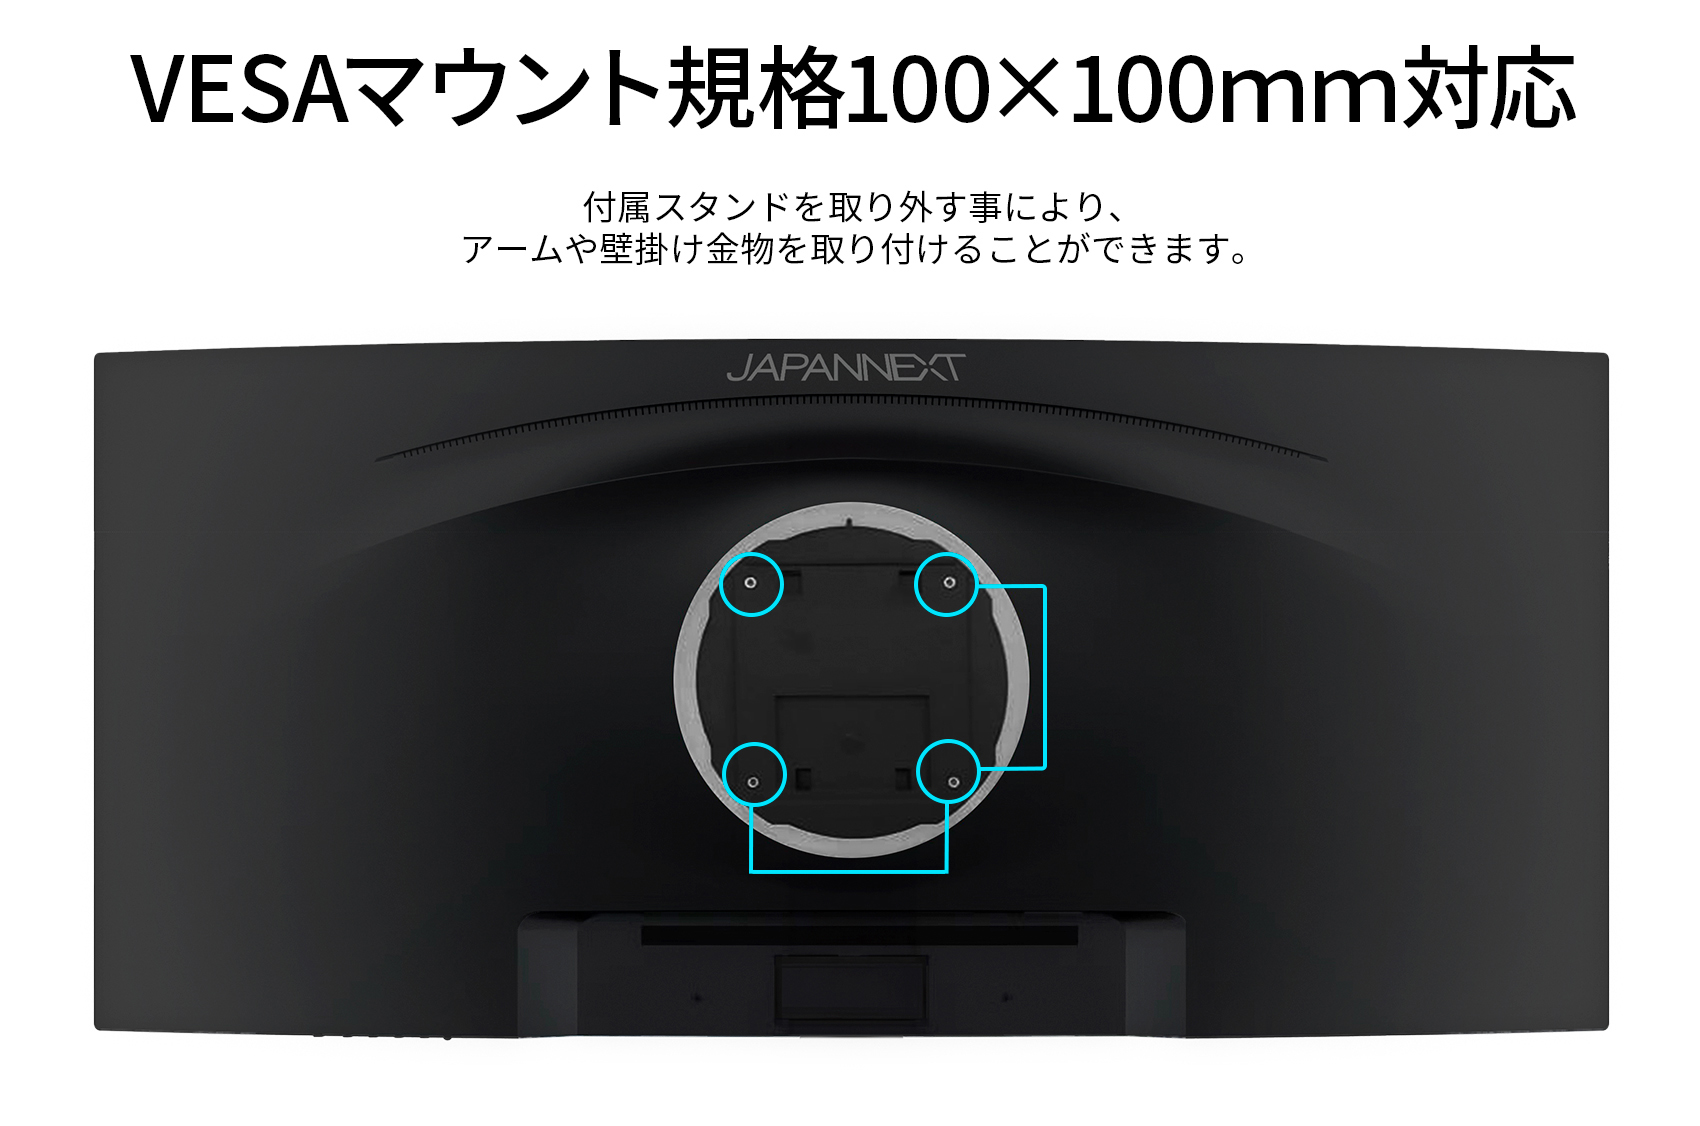 JAPANNEXT 34インチ曲面 IPSパネル UWQHD(3440 x 1440)解像度 ウルトラワイドモニター  JN-IPSC34UWQHDR-C65W-H USB-C給電（最大65W） HDMI DP KVM機能 sRGB99%